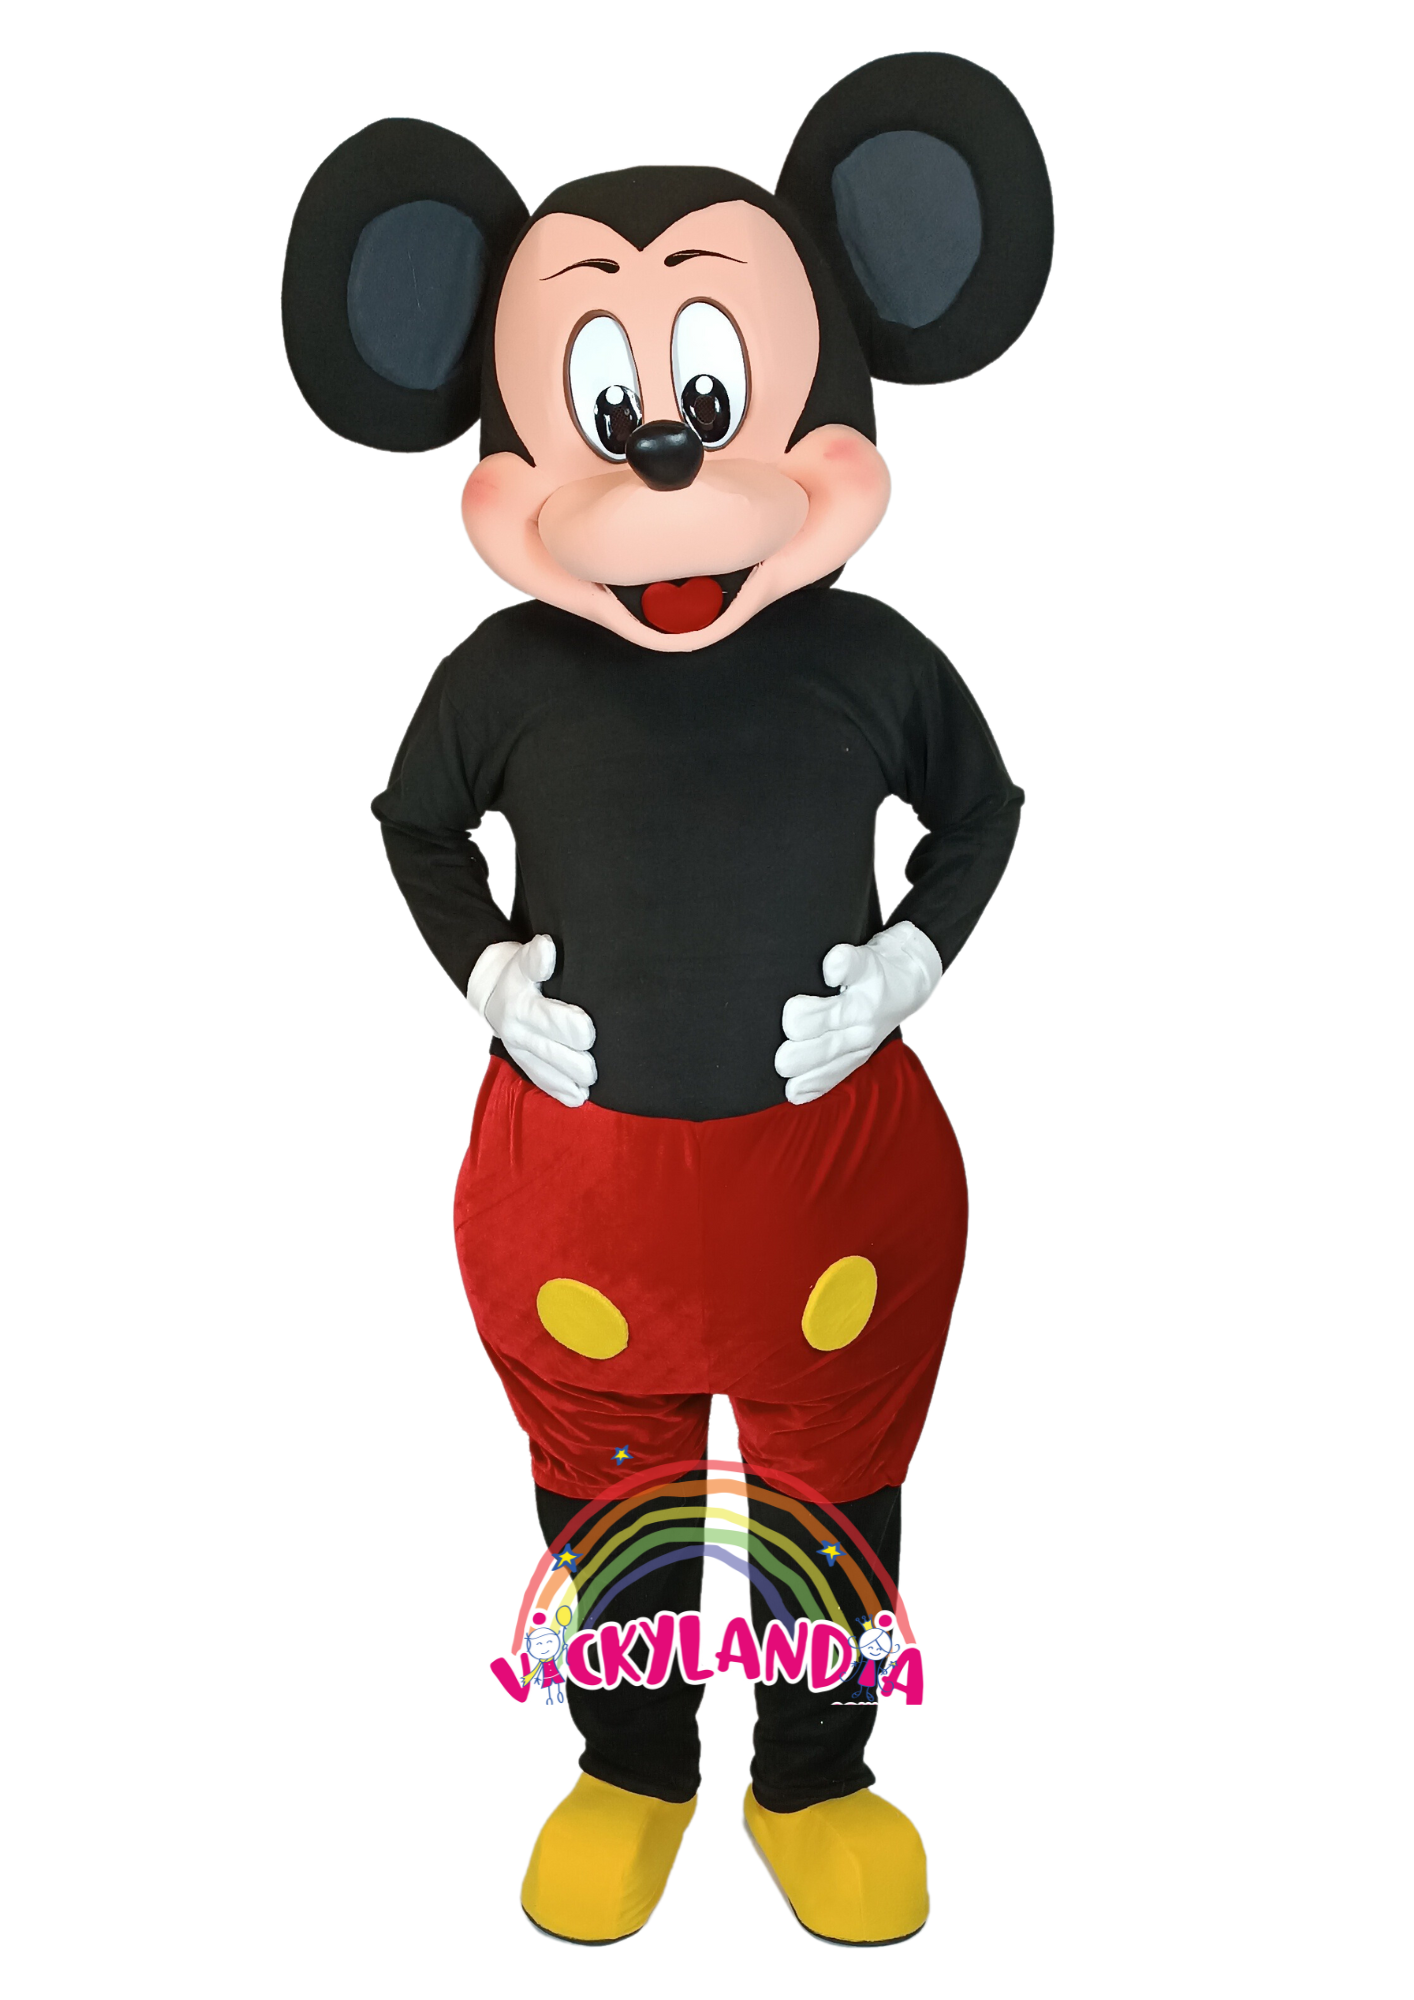 raton sencillo disfraz muñeco cabezon cabezudo botarga mascota publicitaria Peluches personalizados Merchandising corporativos personalizados Fabricante vickylandia